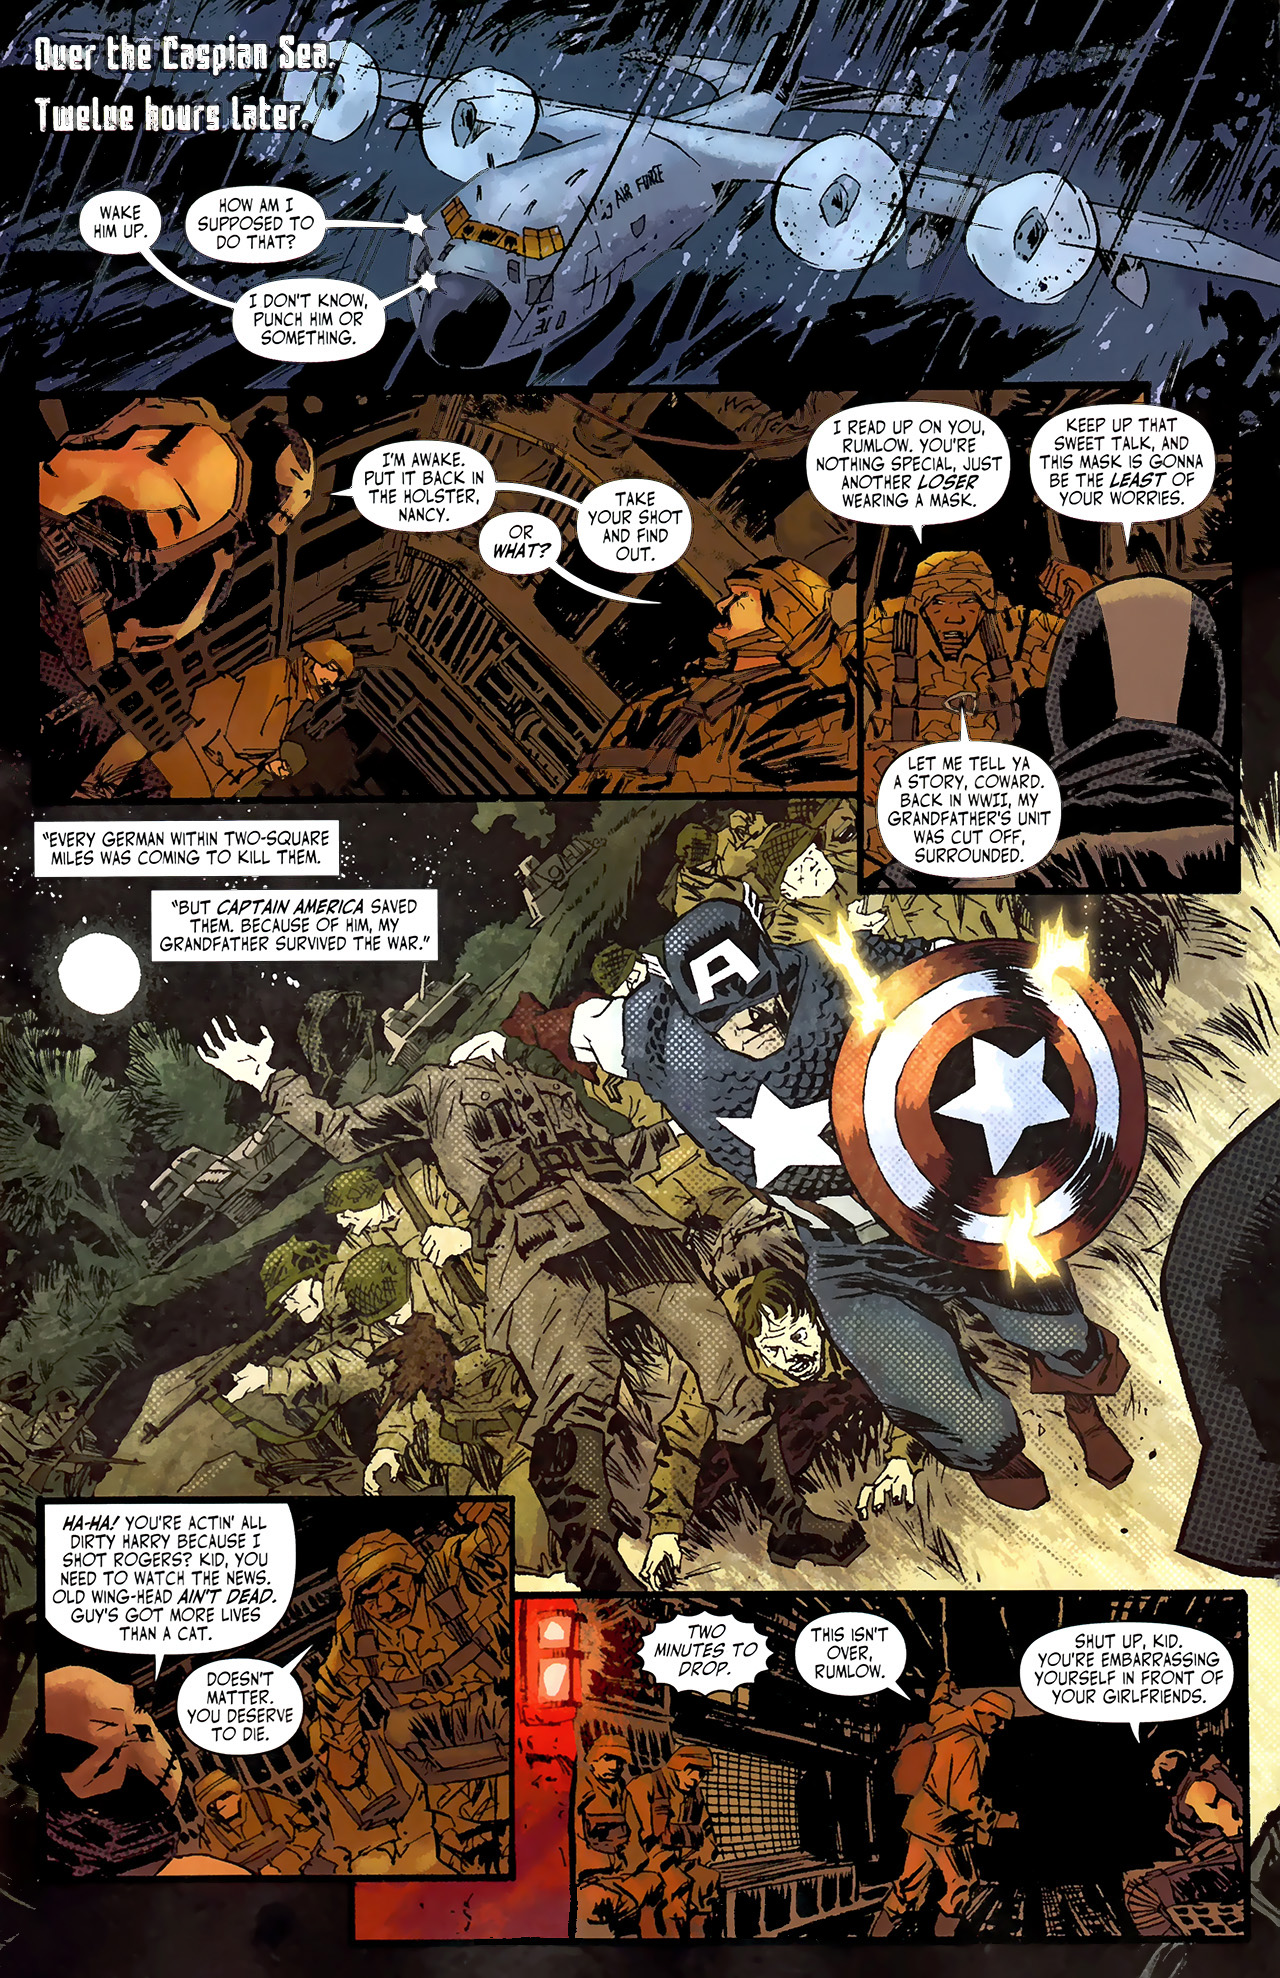 Captain America and Crossbones #1 (ONE-SHOT) - U.S.A. Super-Hero 